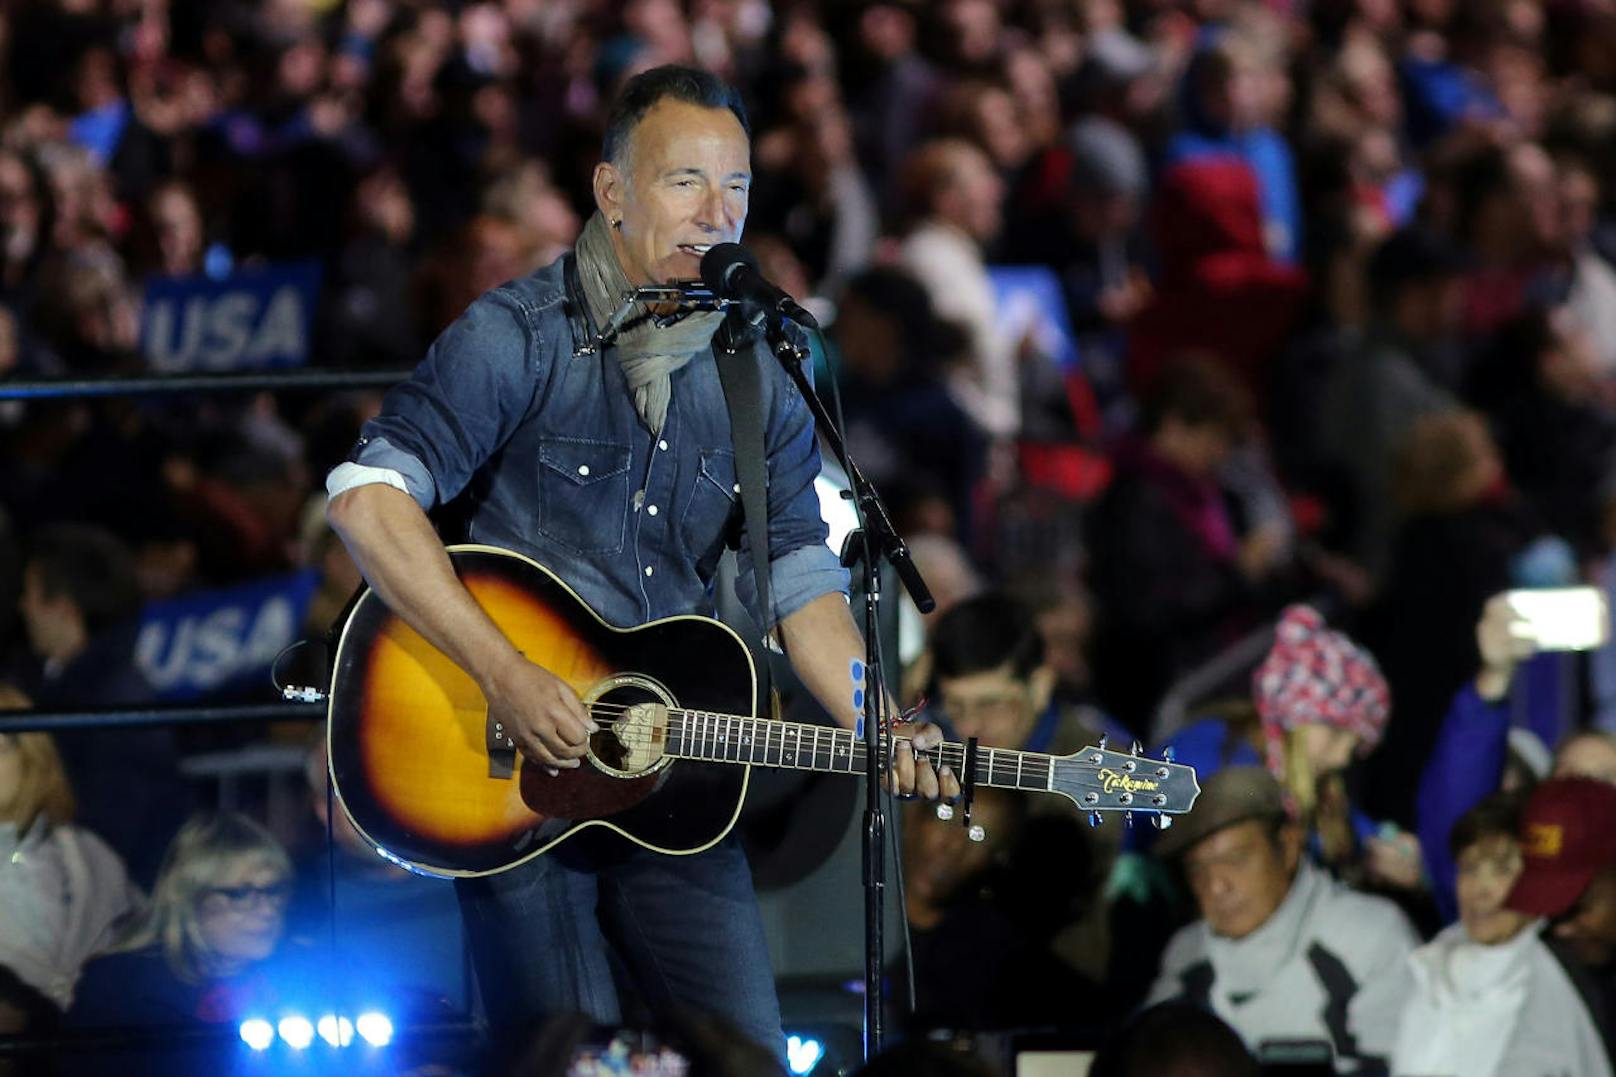 Springsteen betrunken am Steuer: Jeep stoppt Werbedeal